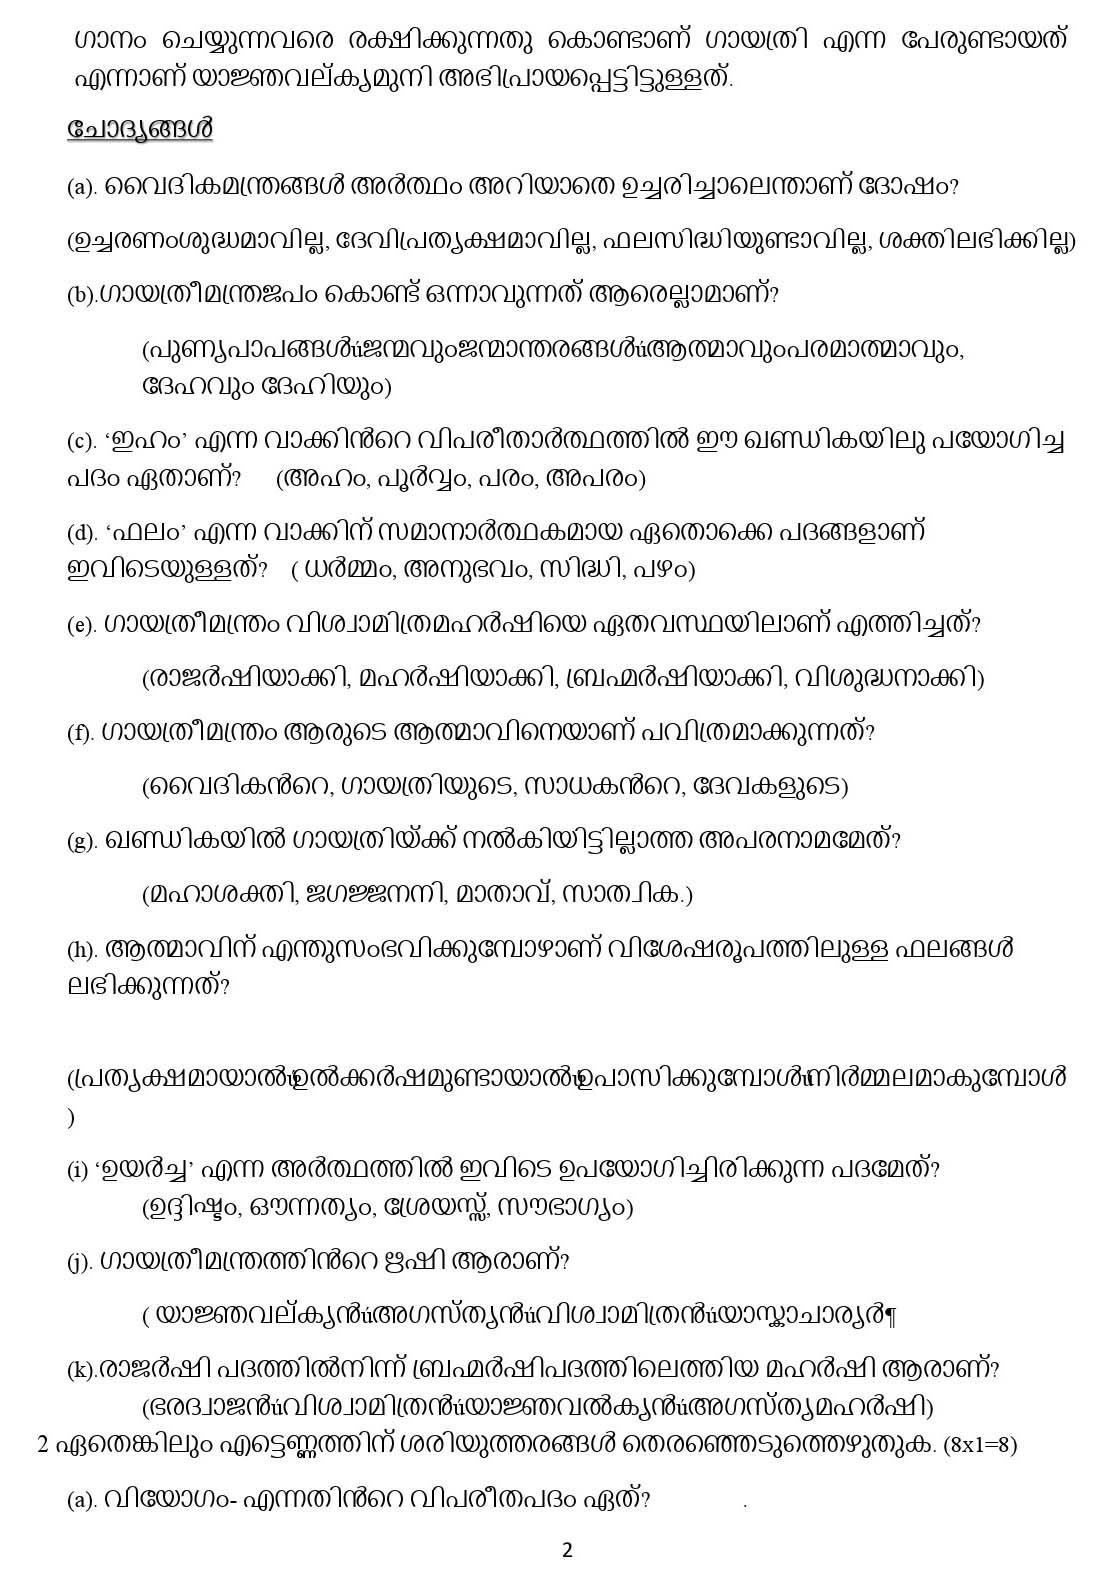 Malayalam CBSE Class X Sample Question Paper 2020 21 - Image 2